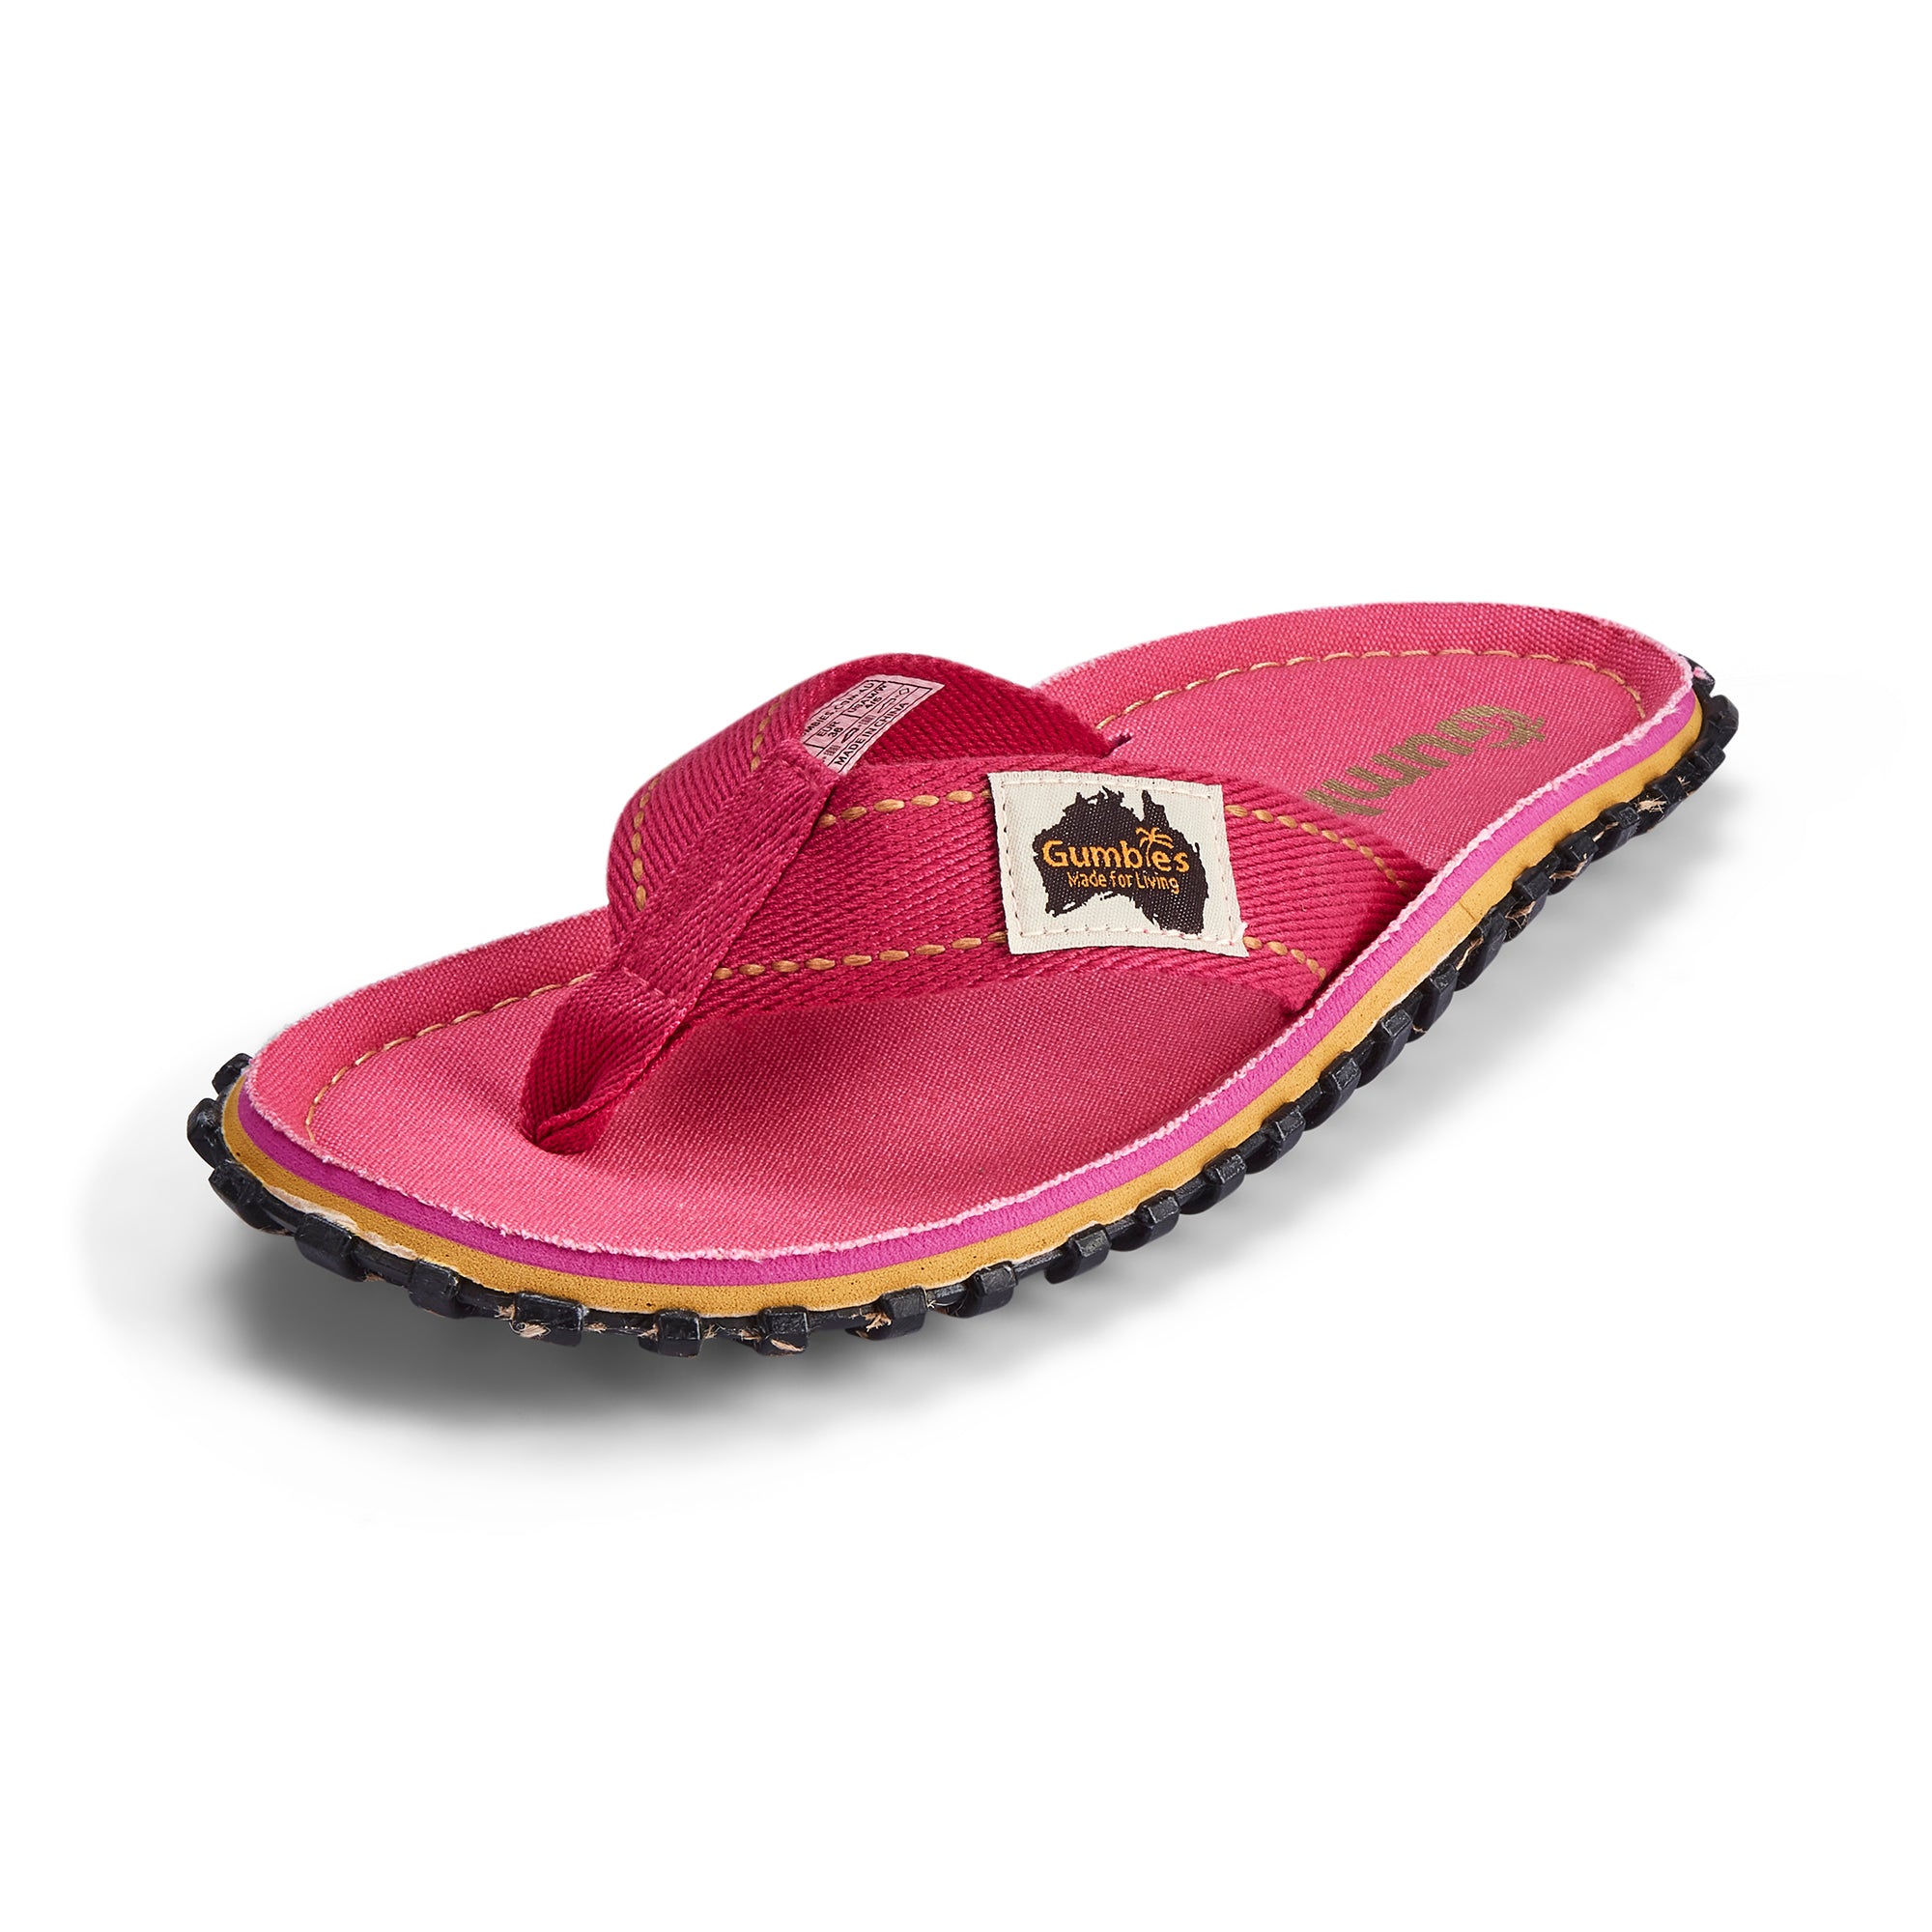 Islander Thongs - Women's - Classic Pink